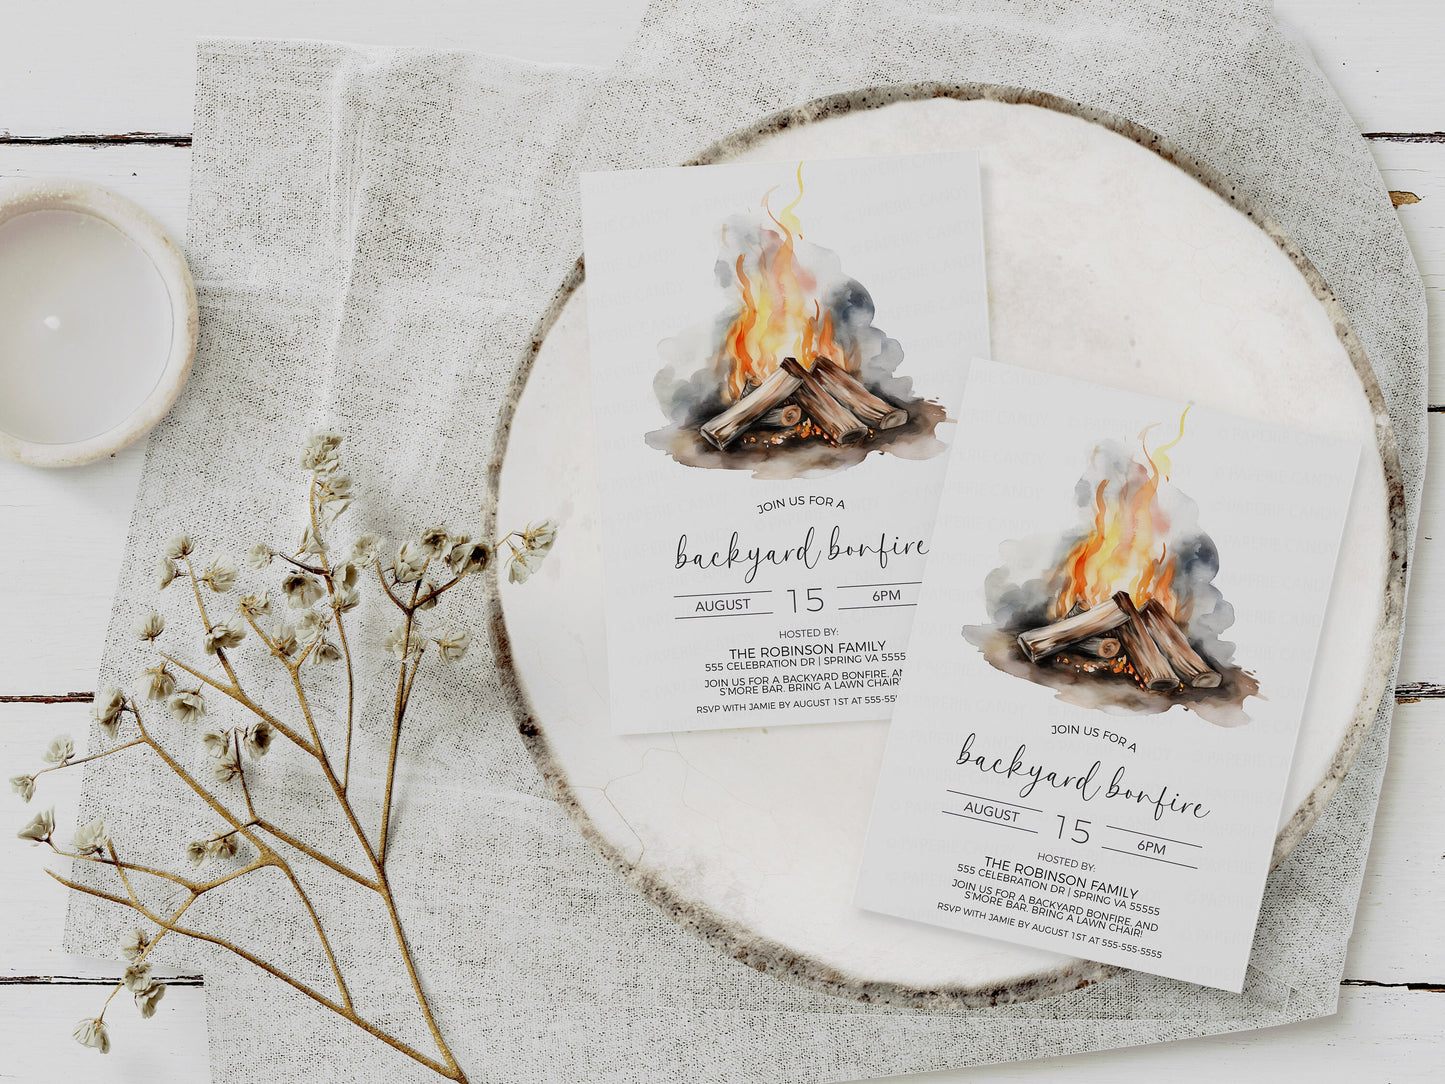 Bonfire Invitation, Backyard Bonfire Invite, Couples Engagement Shower, S'more Bar, Mr Mrs, Birthday Party Campfire, Printable Editable